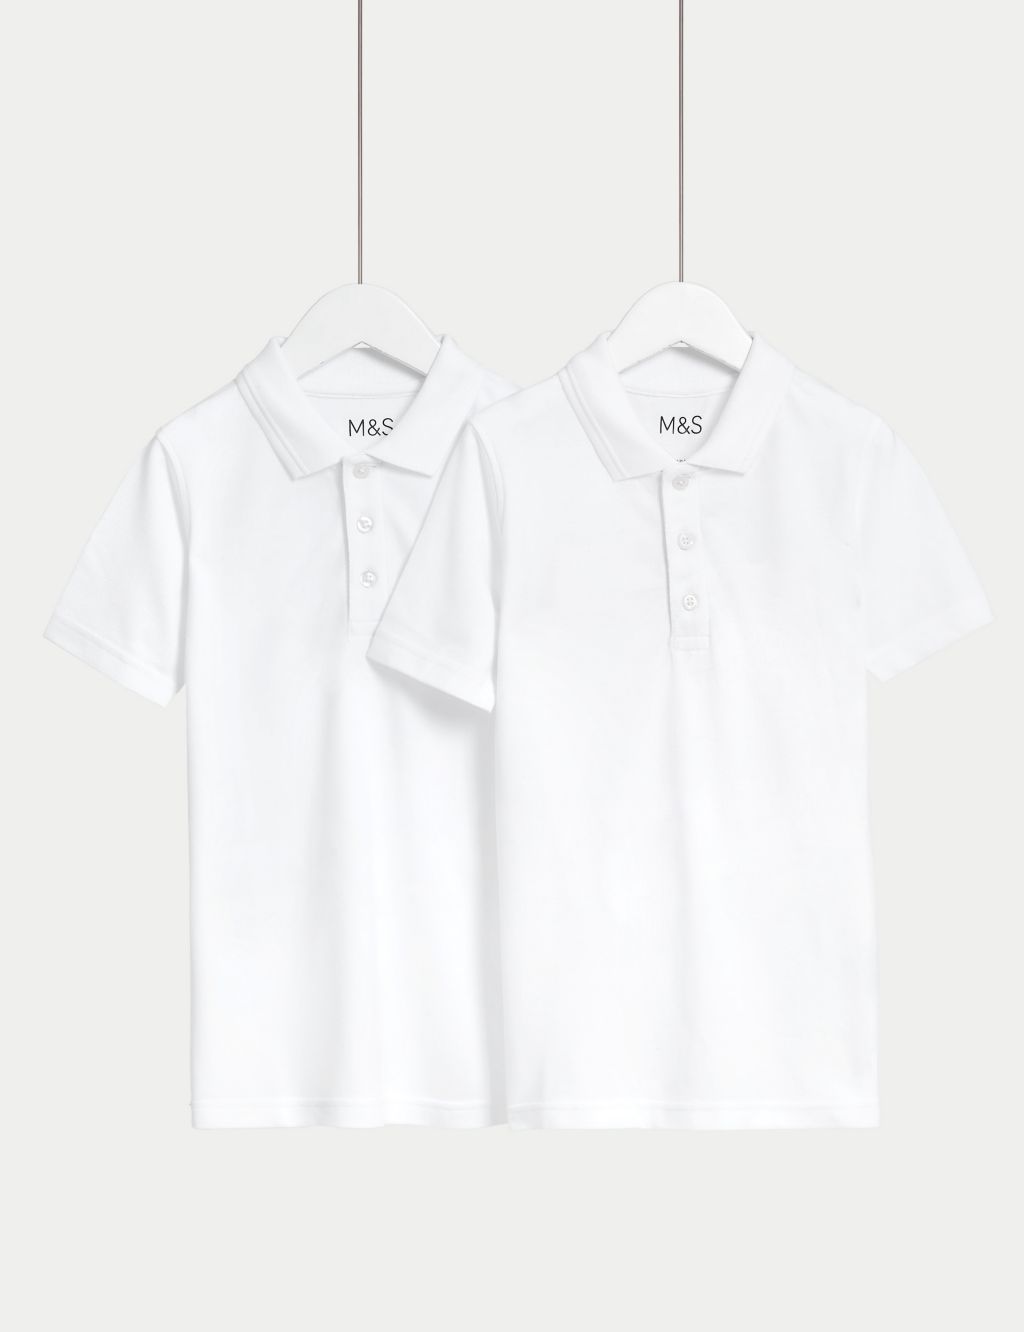 Brilliant Basics Kids Polo Shirt - Yellow - Size 6